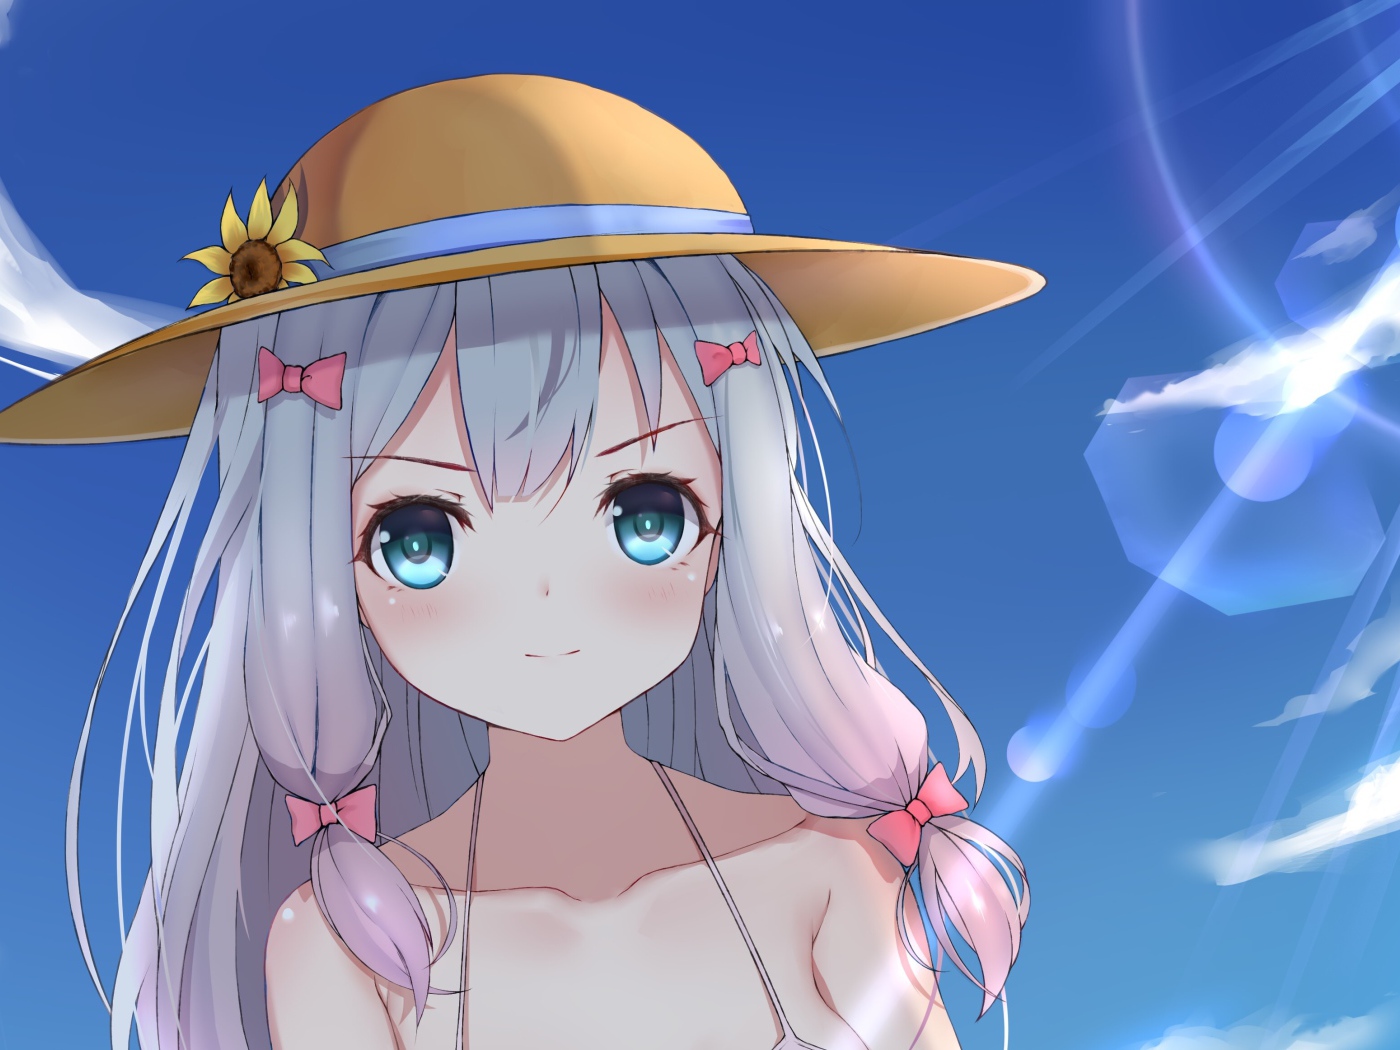 Eromanga-sensei anime girl in a hat against the sky